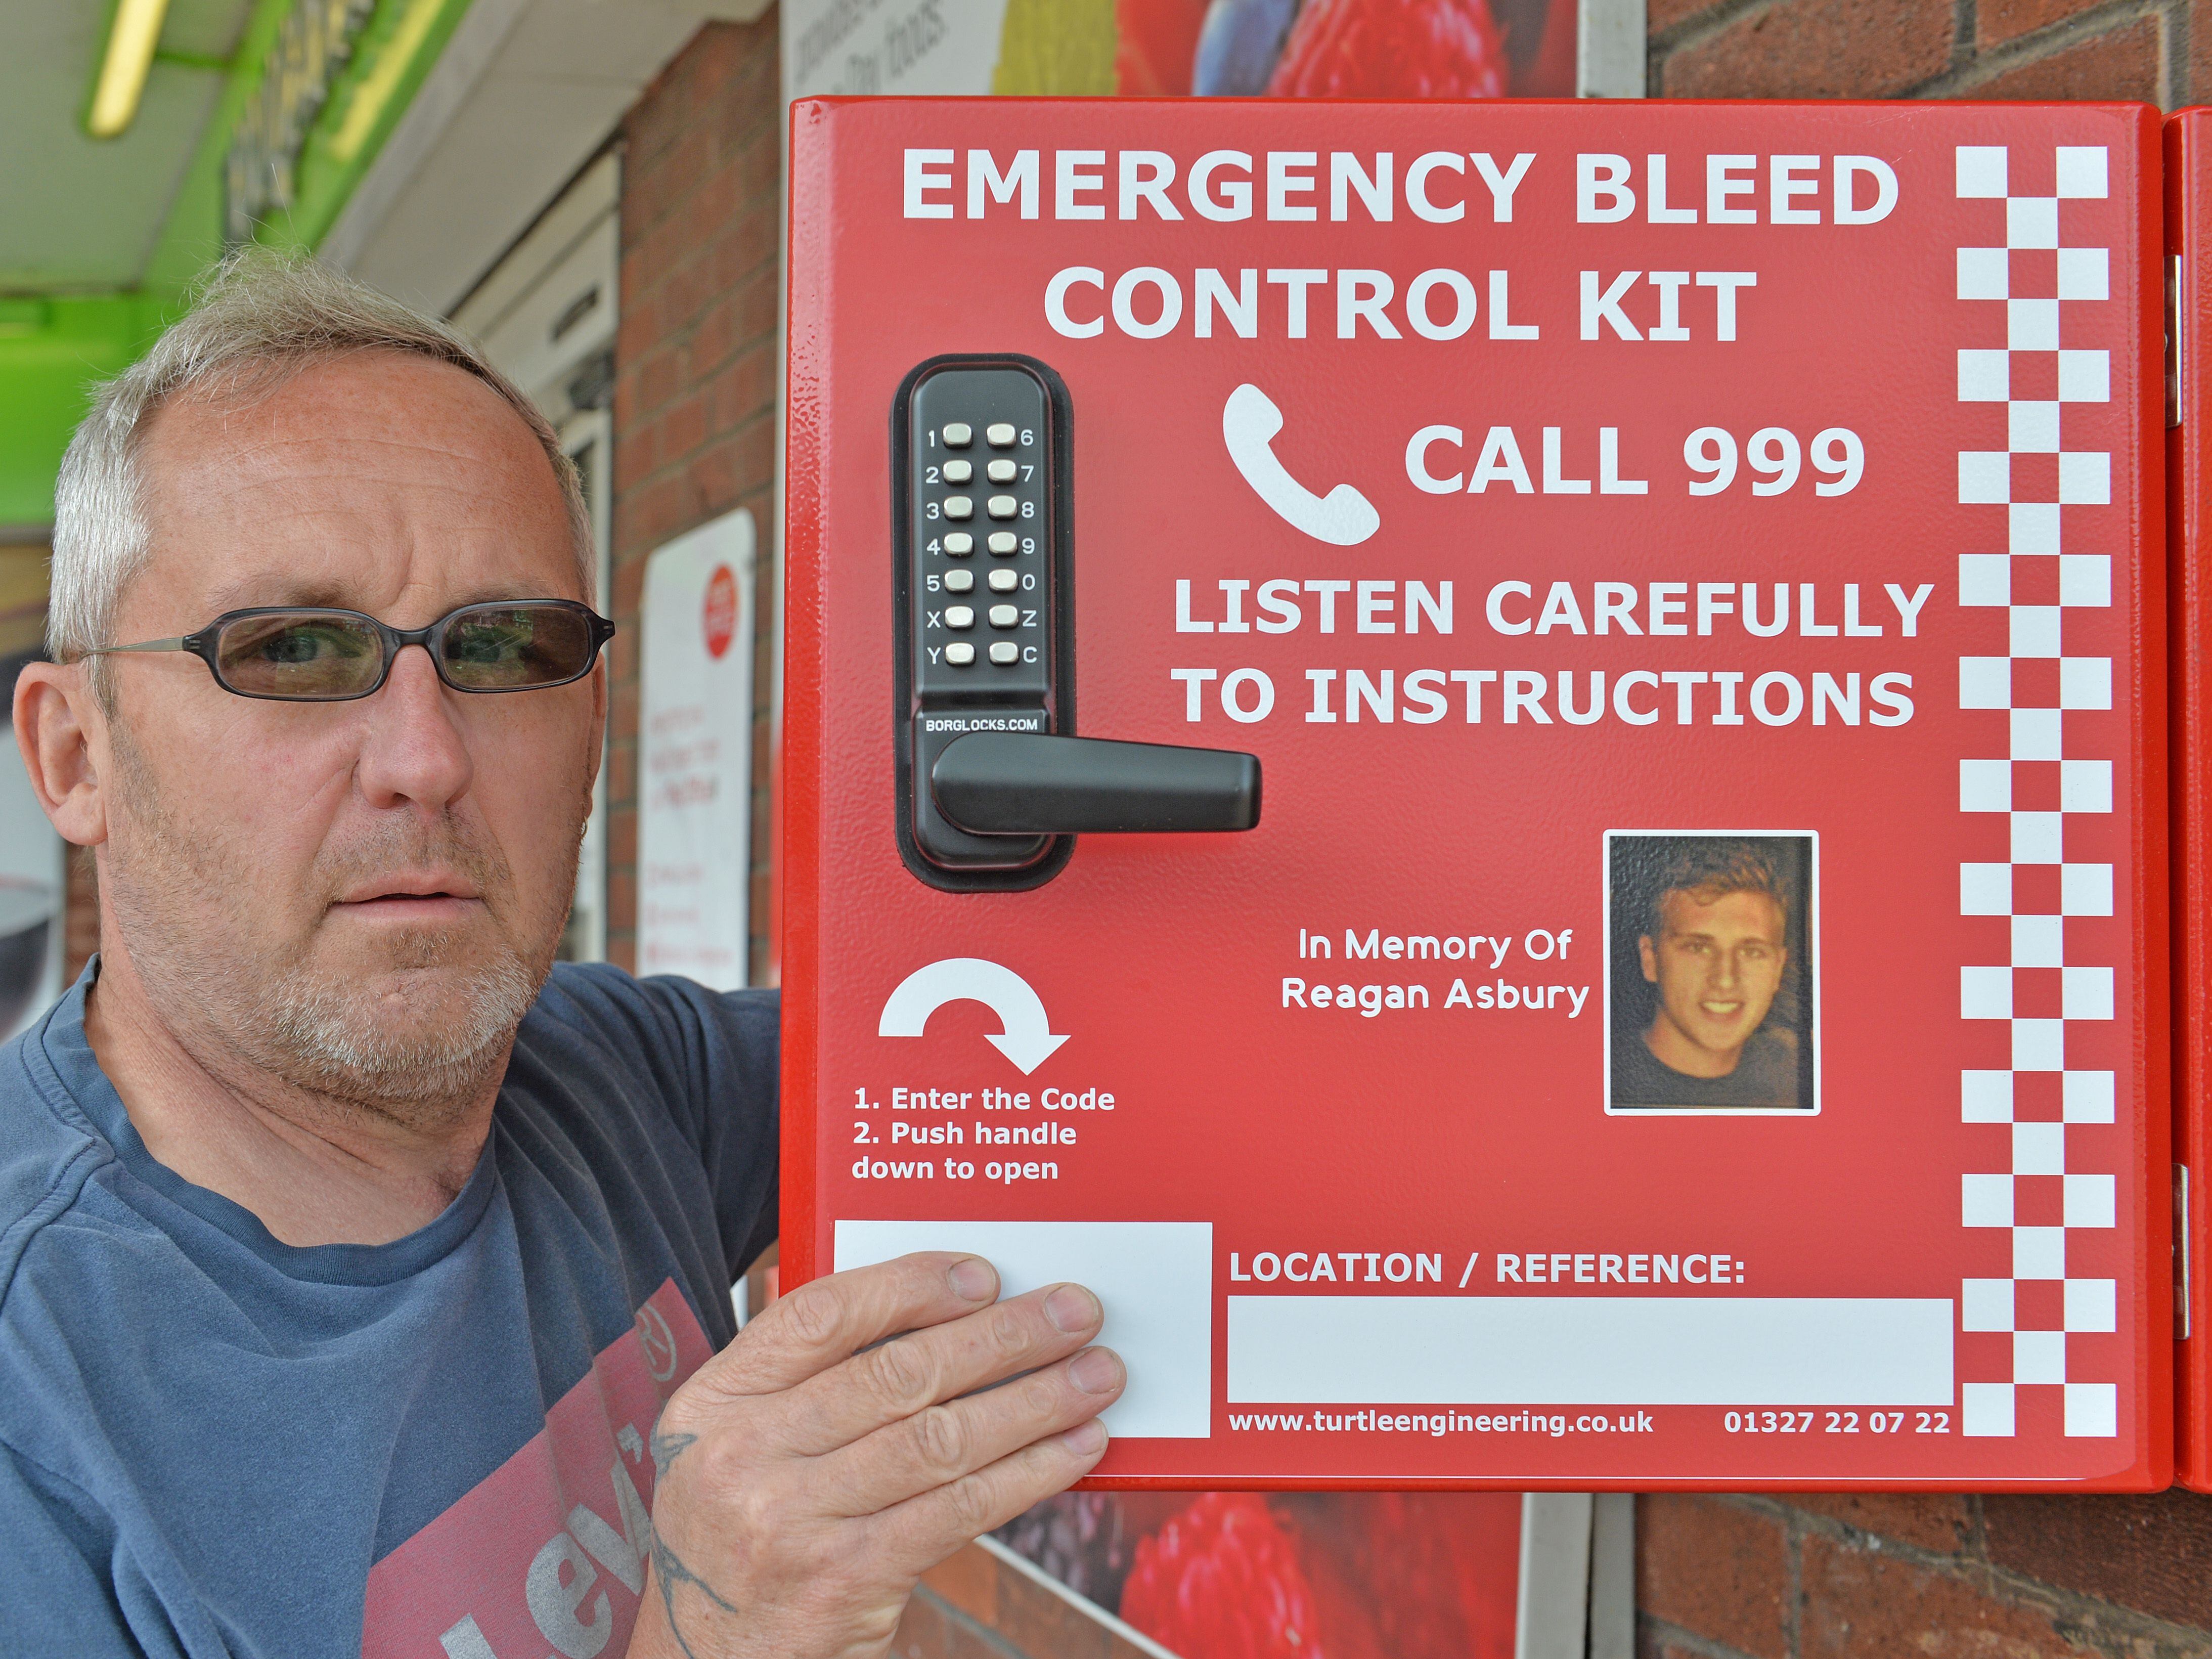 Fundraising drive for lifesaving kits in memory of Walsall knife victim Reagan Asbury